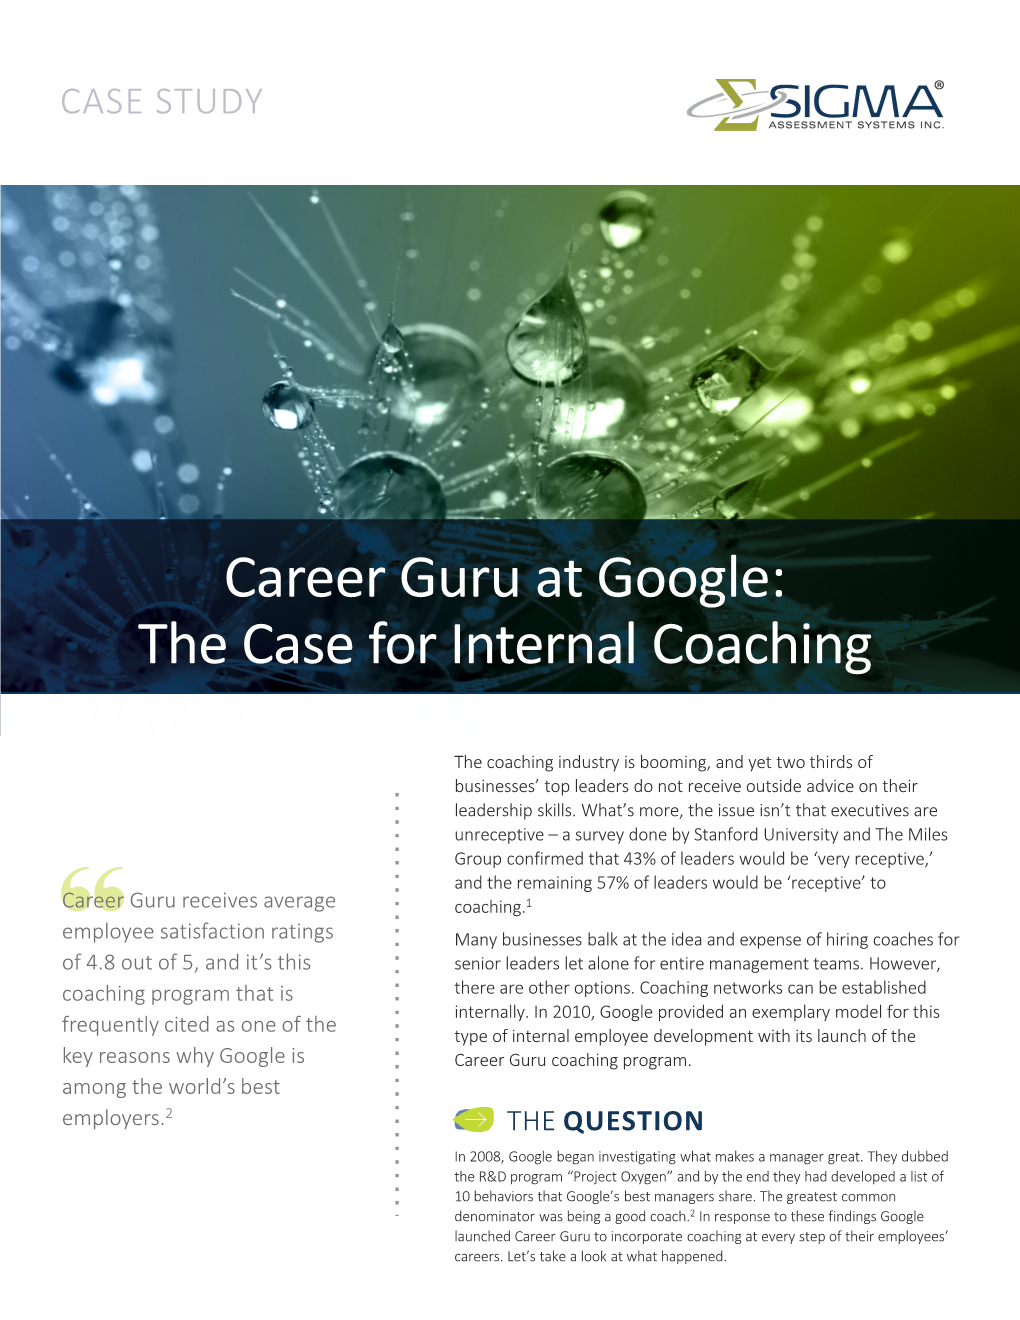 Career Guru at Google: the Case for Internal Coaching